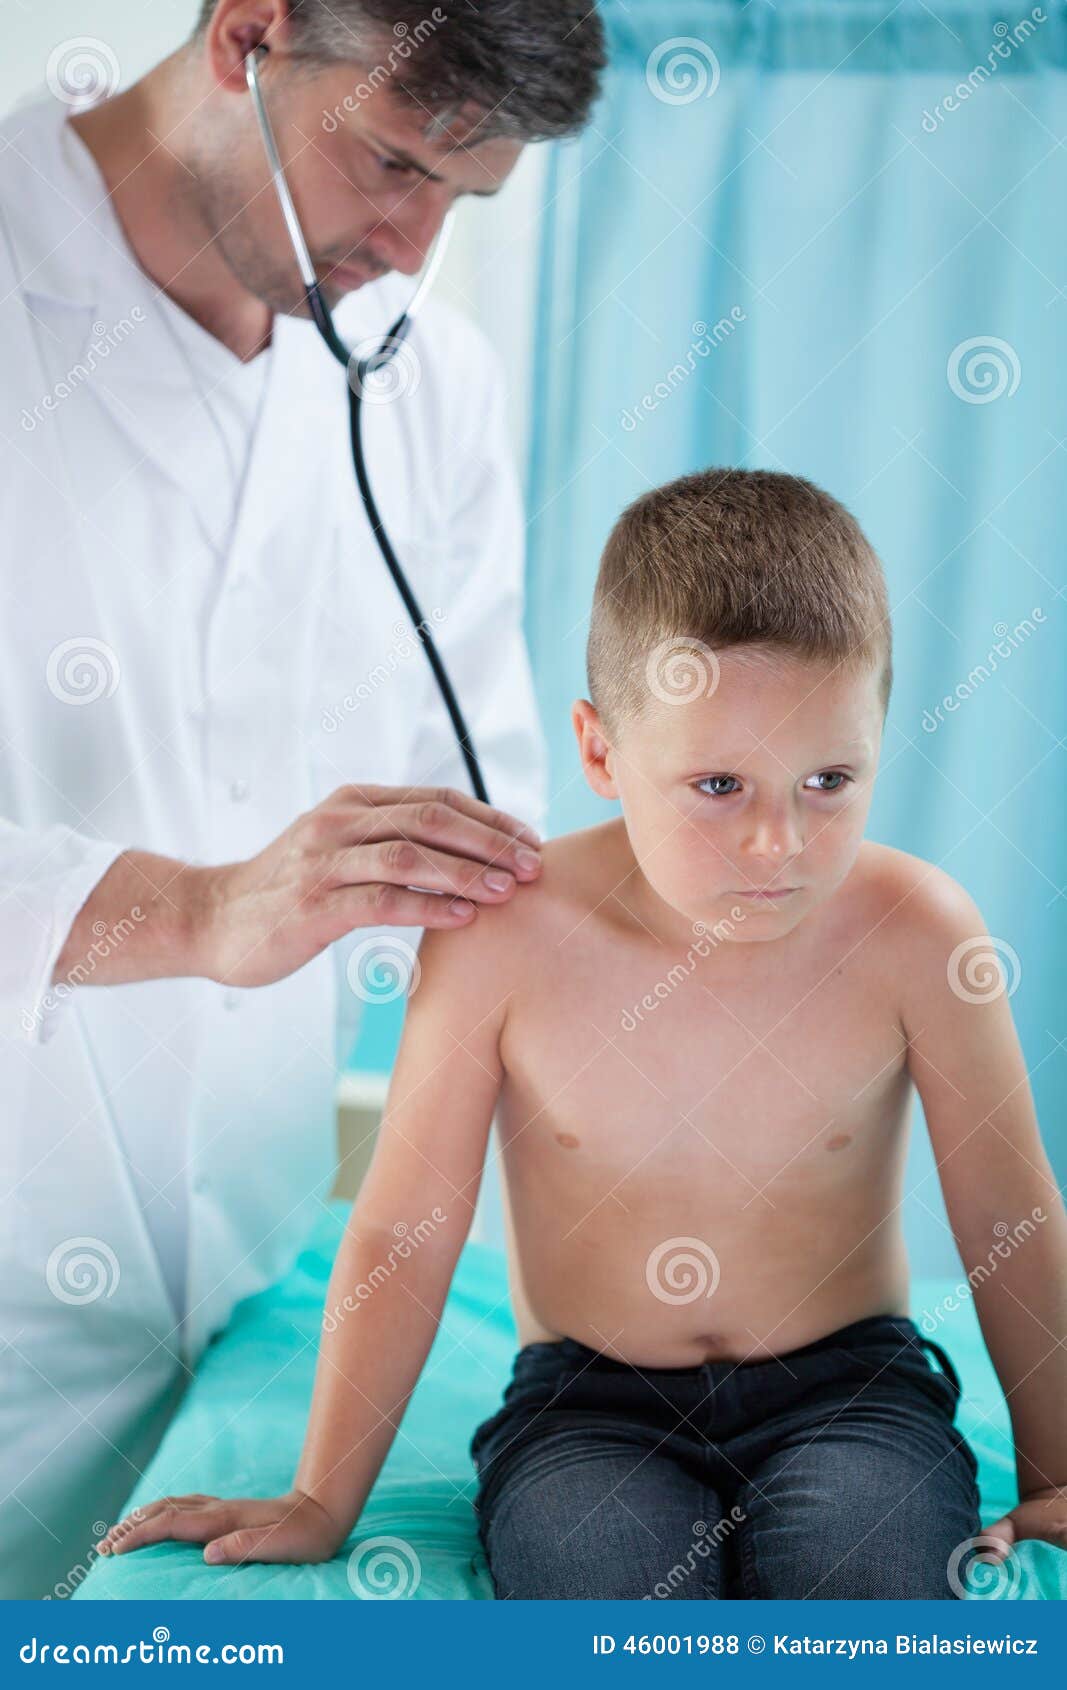 pediatrist makes auscultation